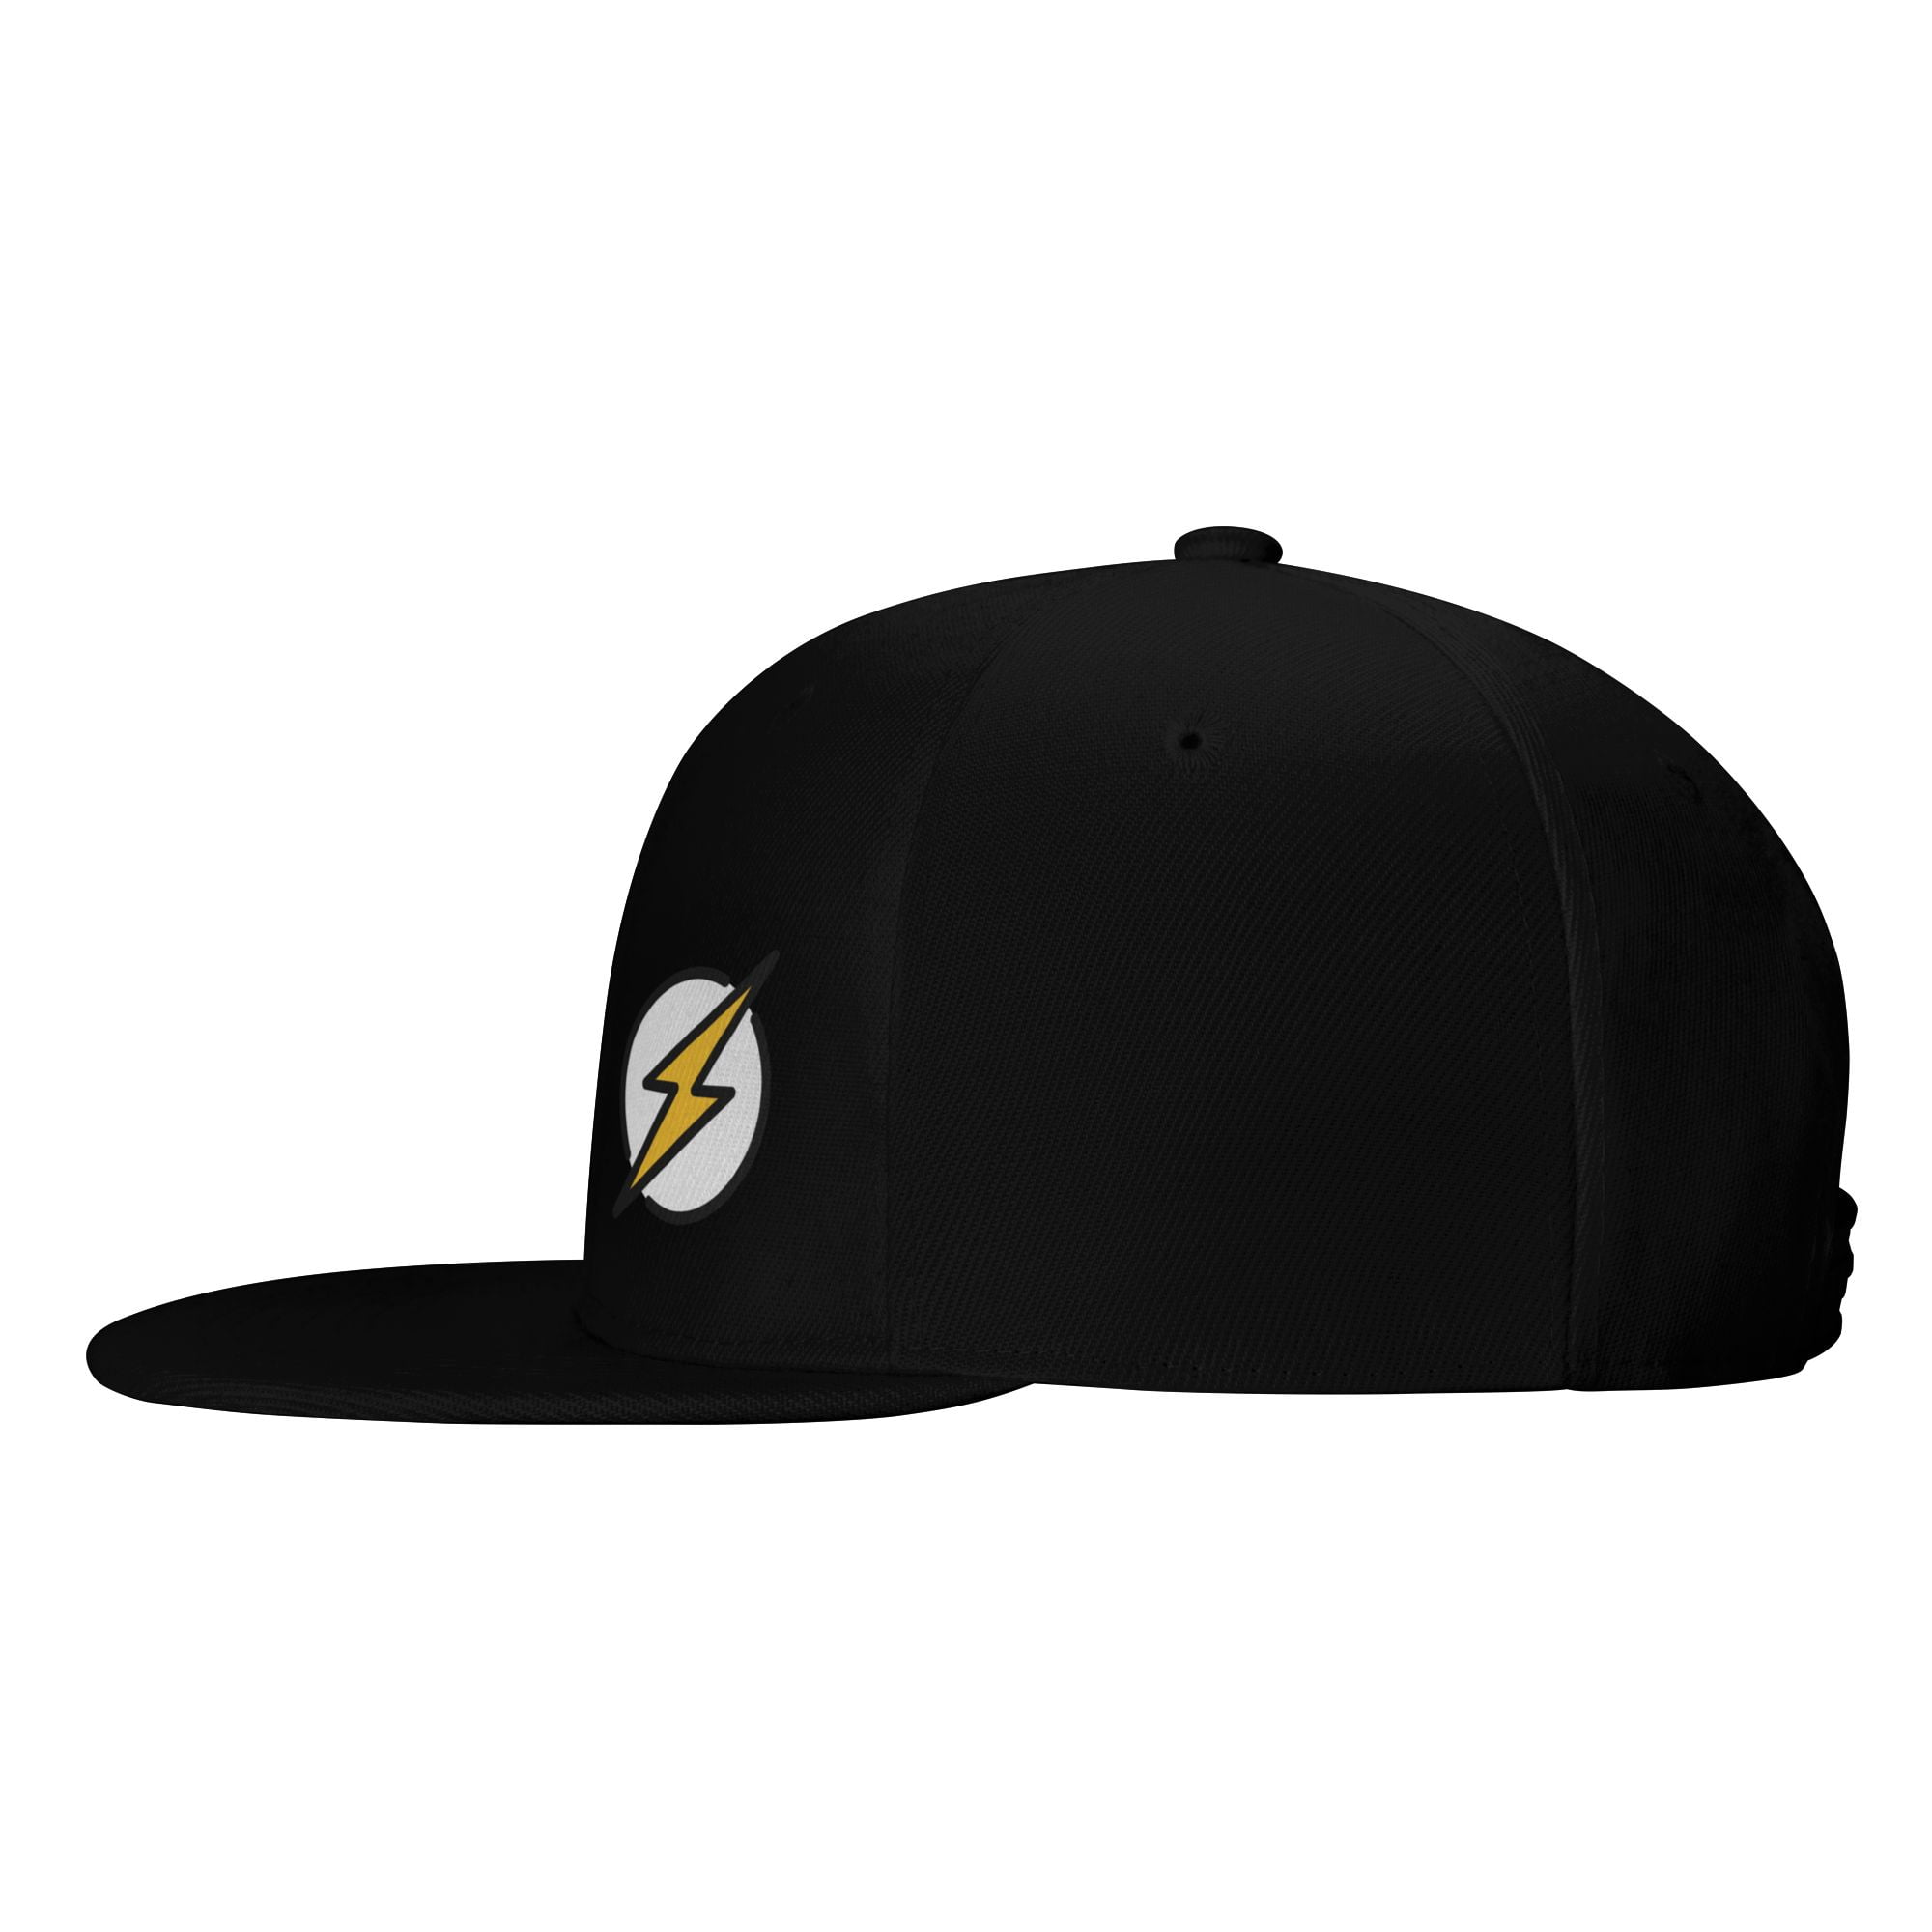 DouZhe Flat Brim Cap Snapback Hat, Yellow Flash Prints Adjustable